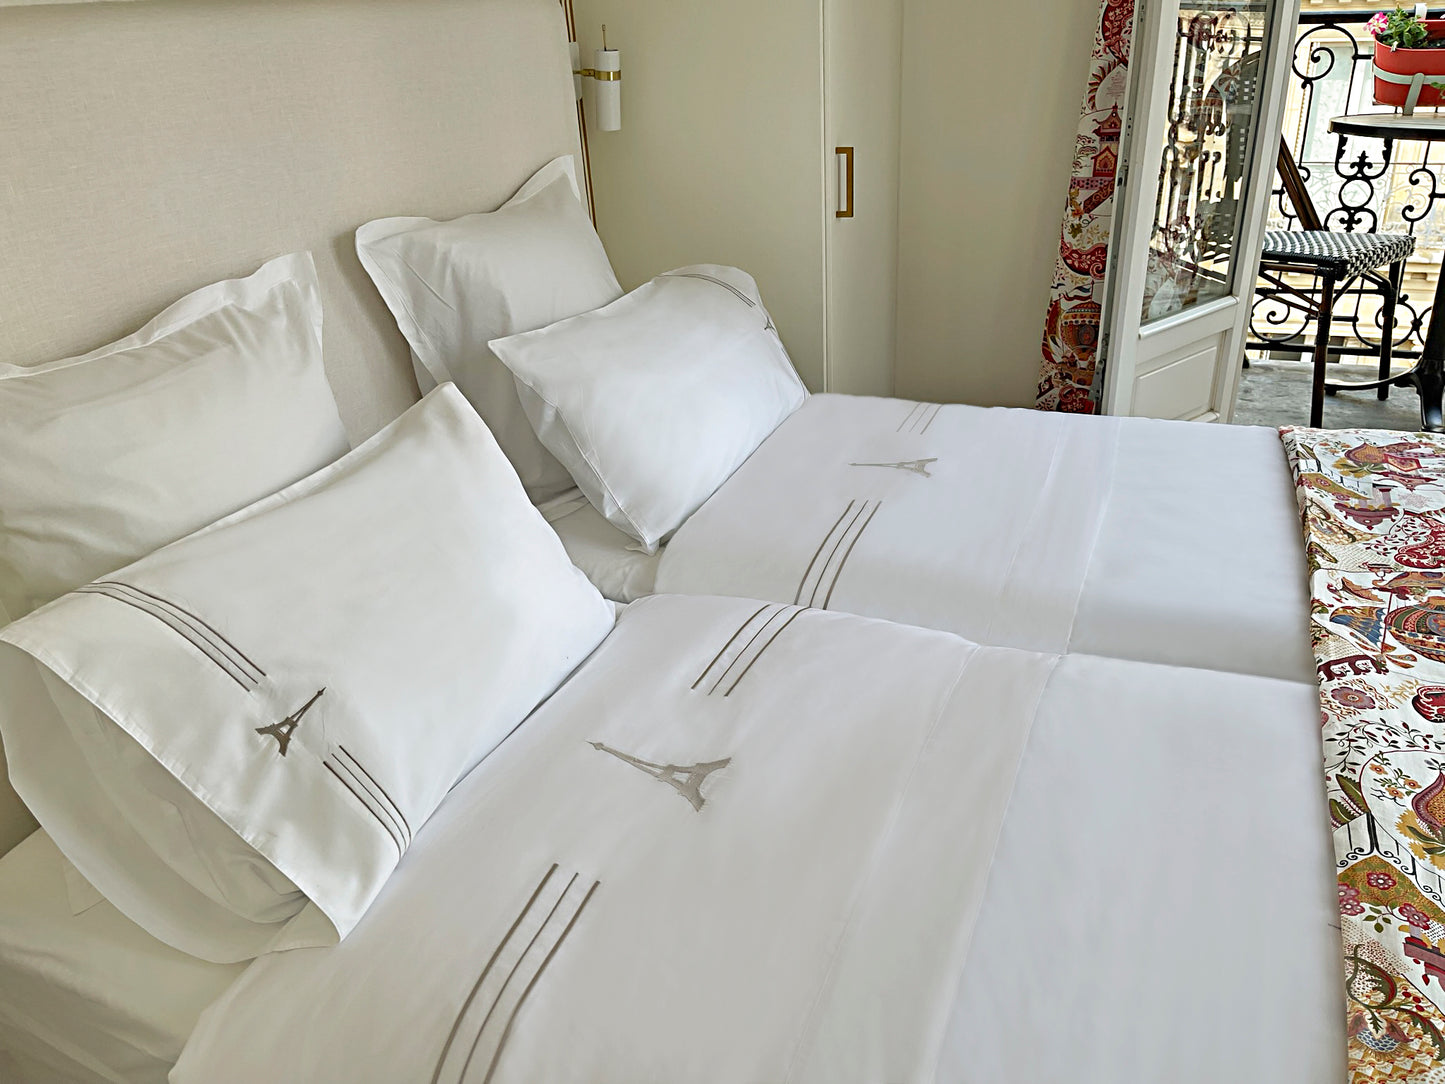 Eiffel Tower Luxury Standard Pillow Cases (Set of 2)